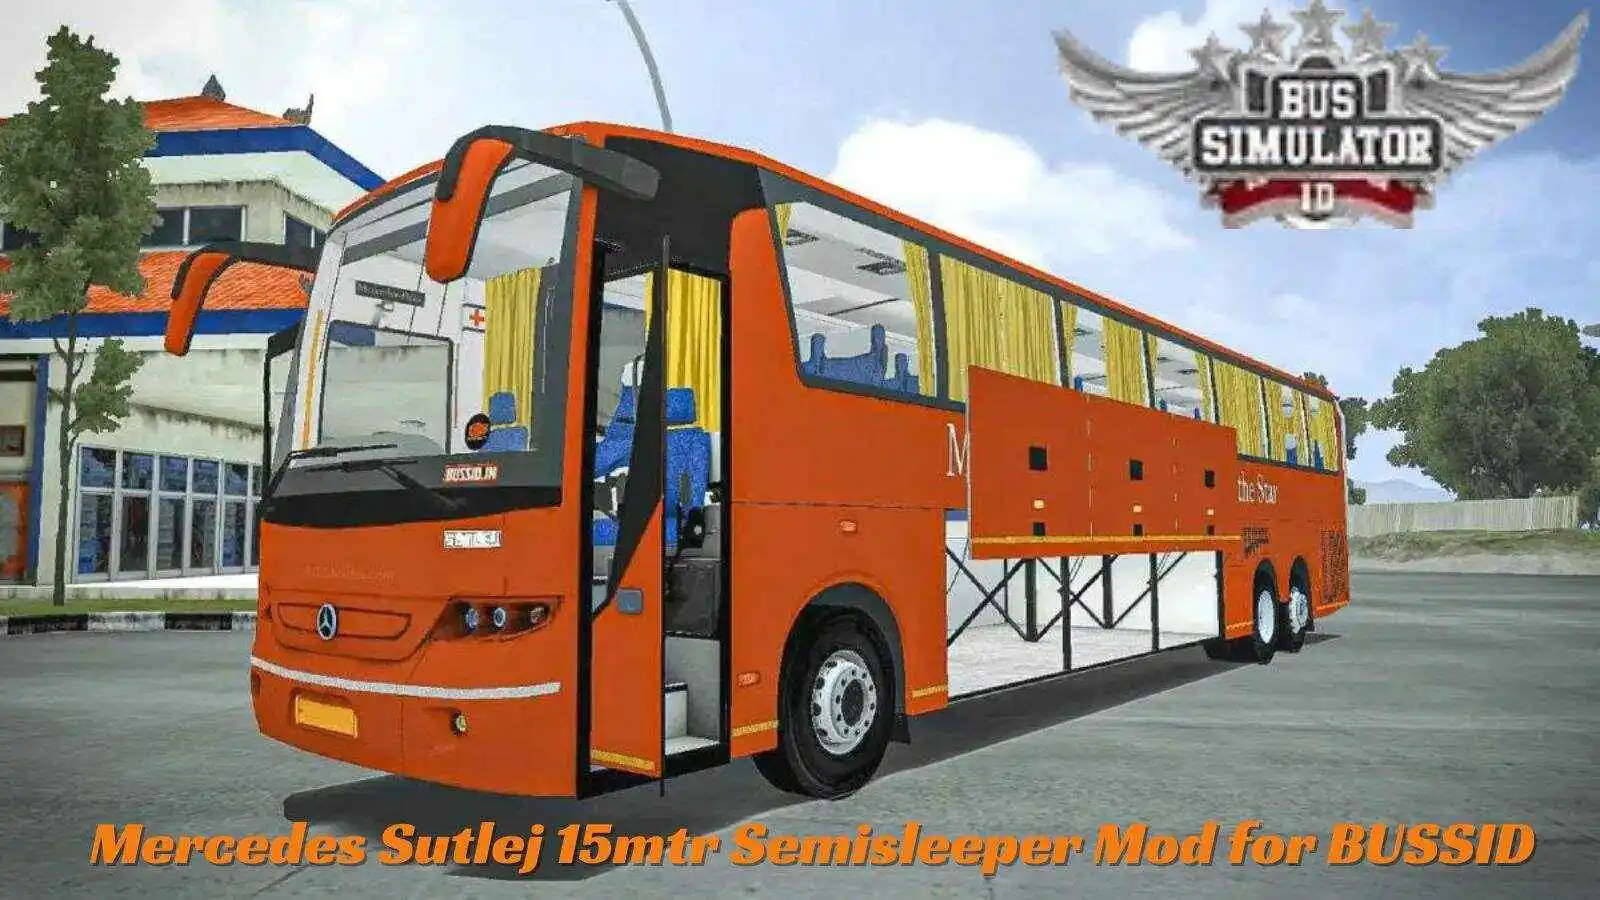 Mercedes-Sutlej-15mtr-Semisleeper-Mod-for-BUSSID